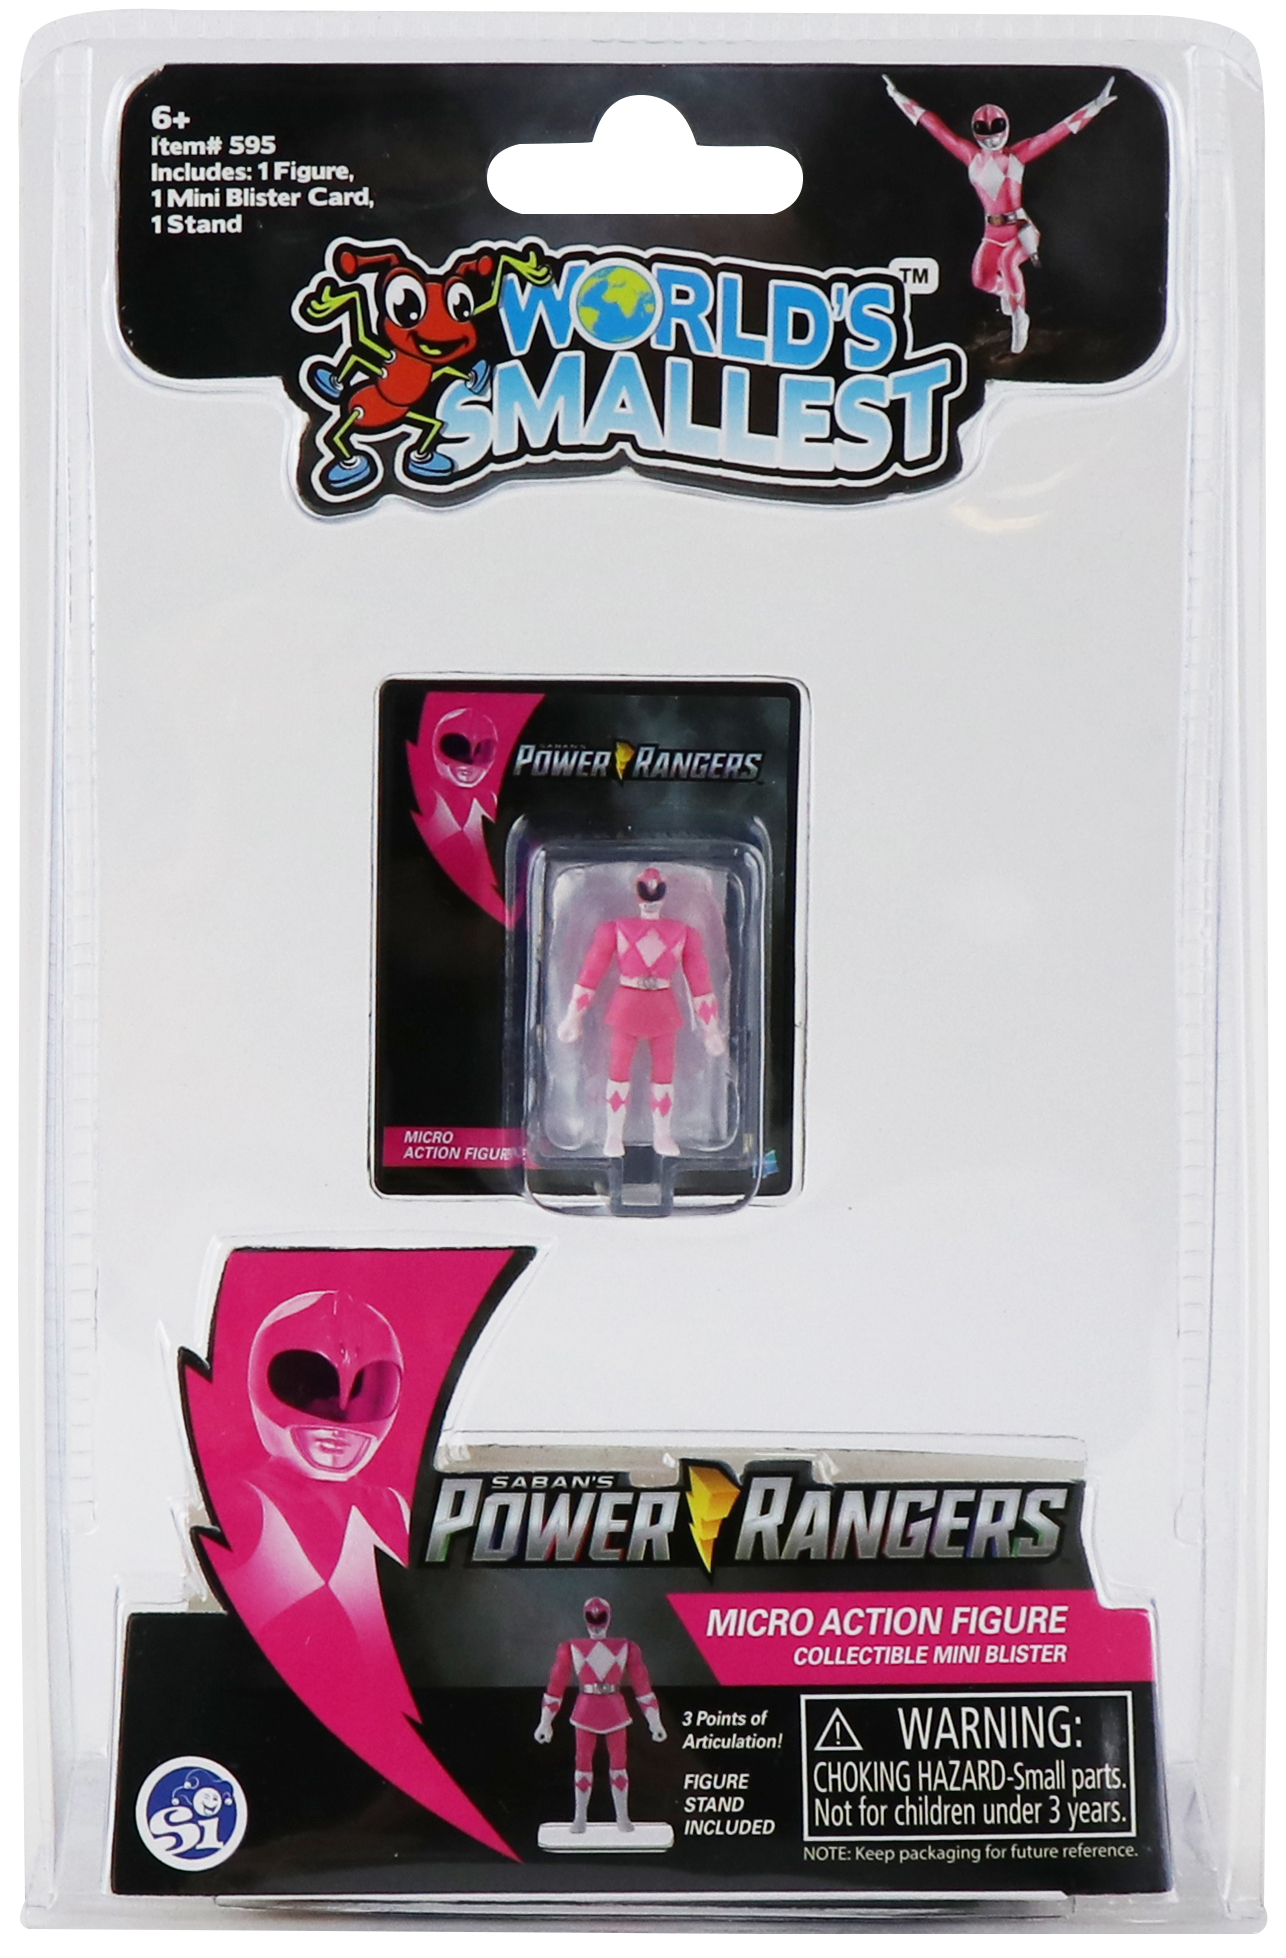 Ranger Micro. World's smallest Micro Action Figures. Micro Figures Worlds smallest.